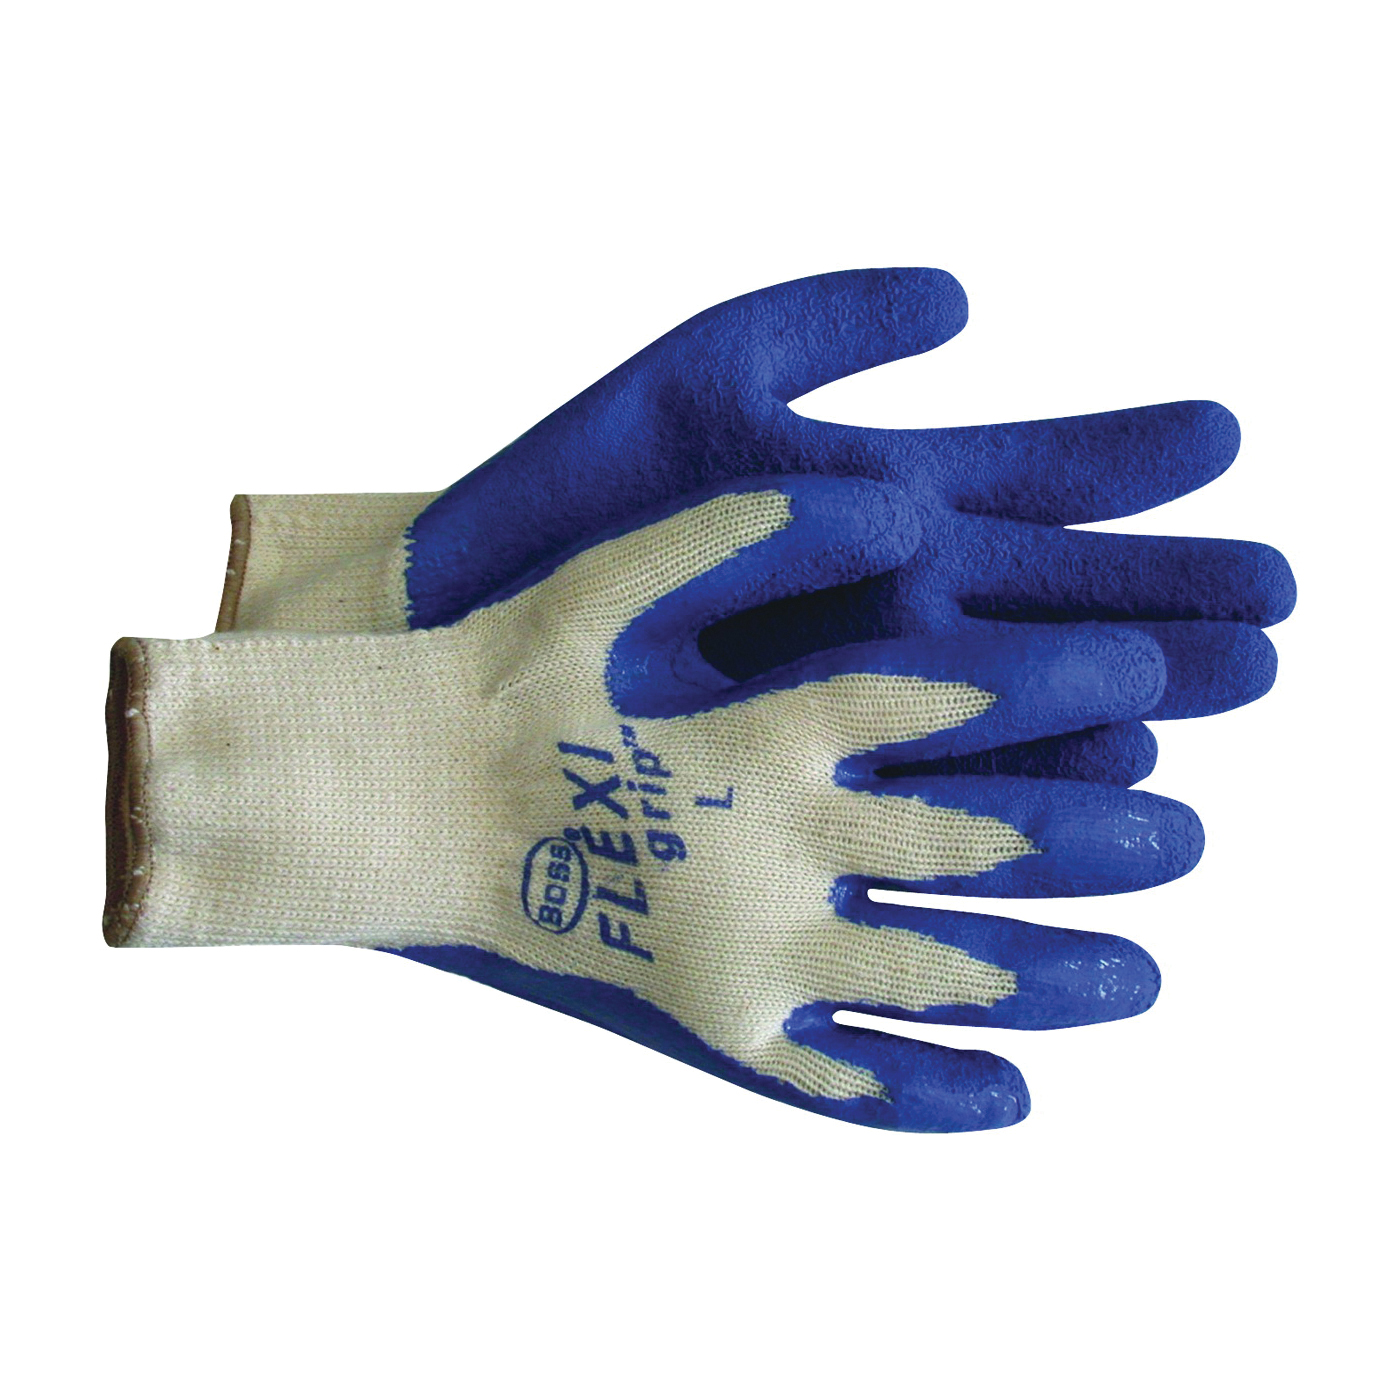 Boss 8426XL Protective Gloves, XL, Knit Wrist Cuff, Latex Coating, Blue - 1